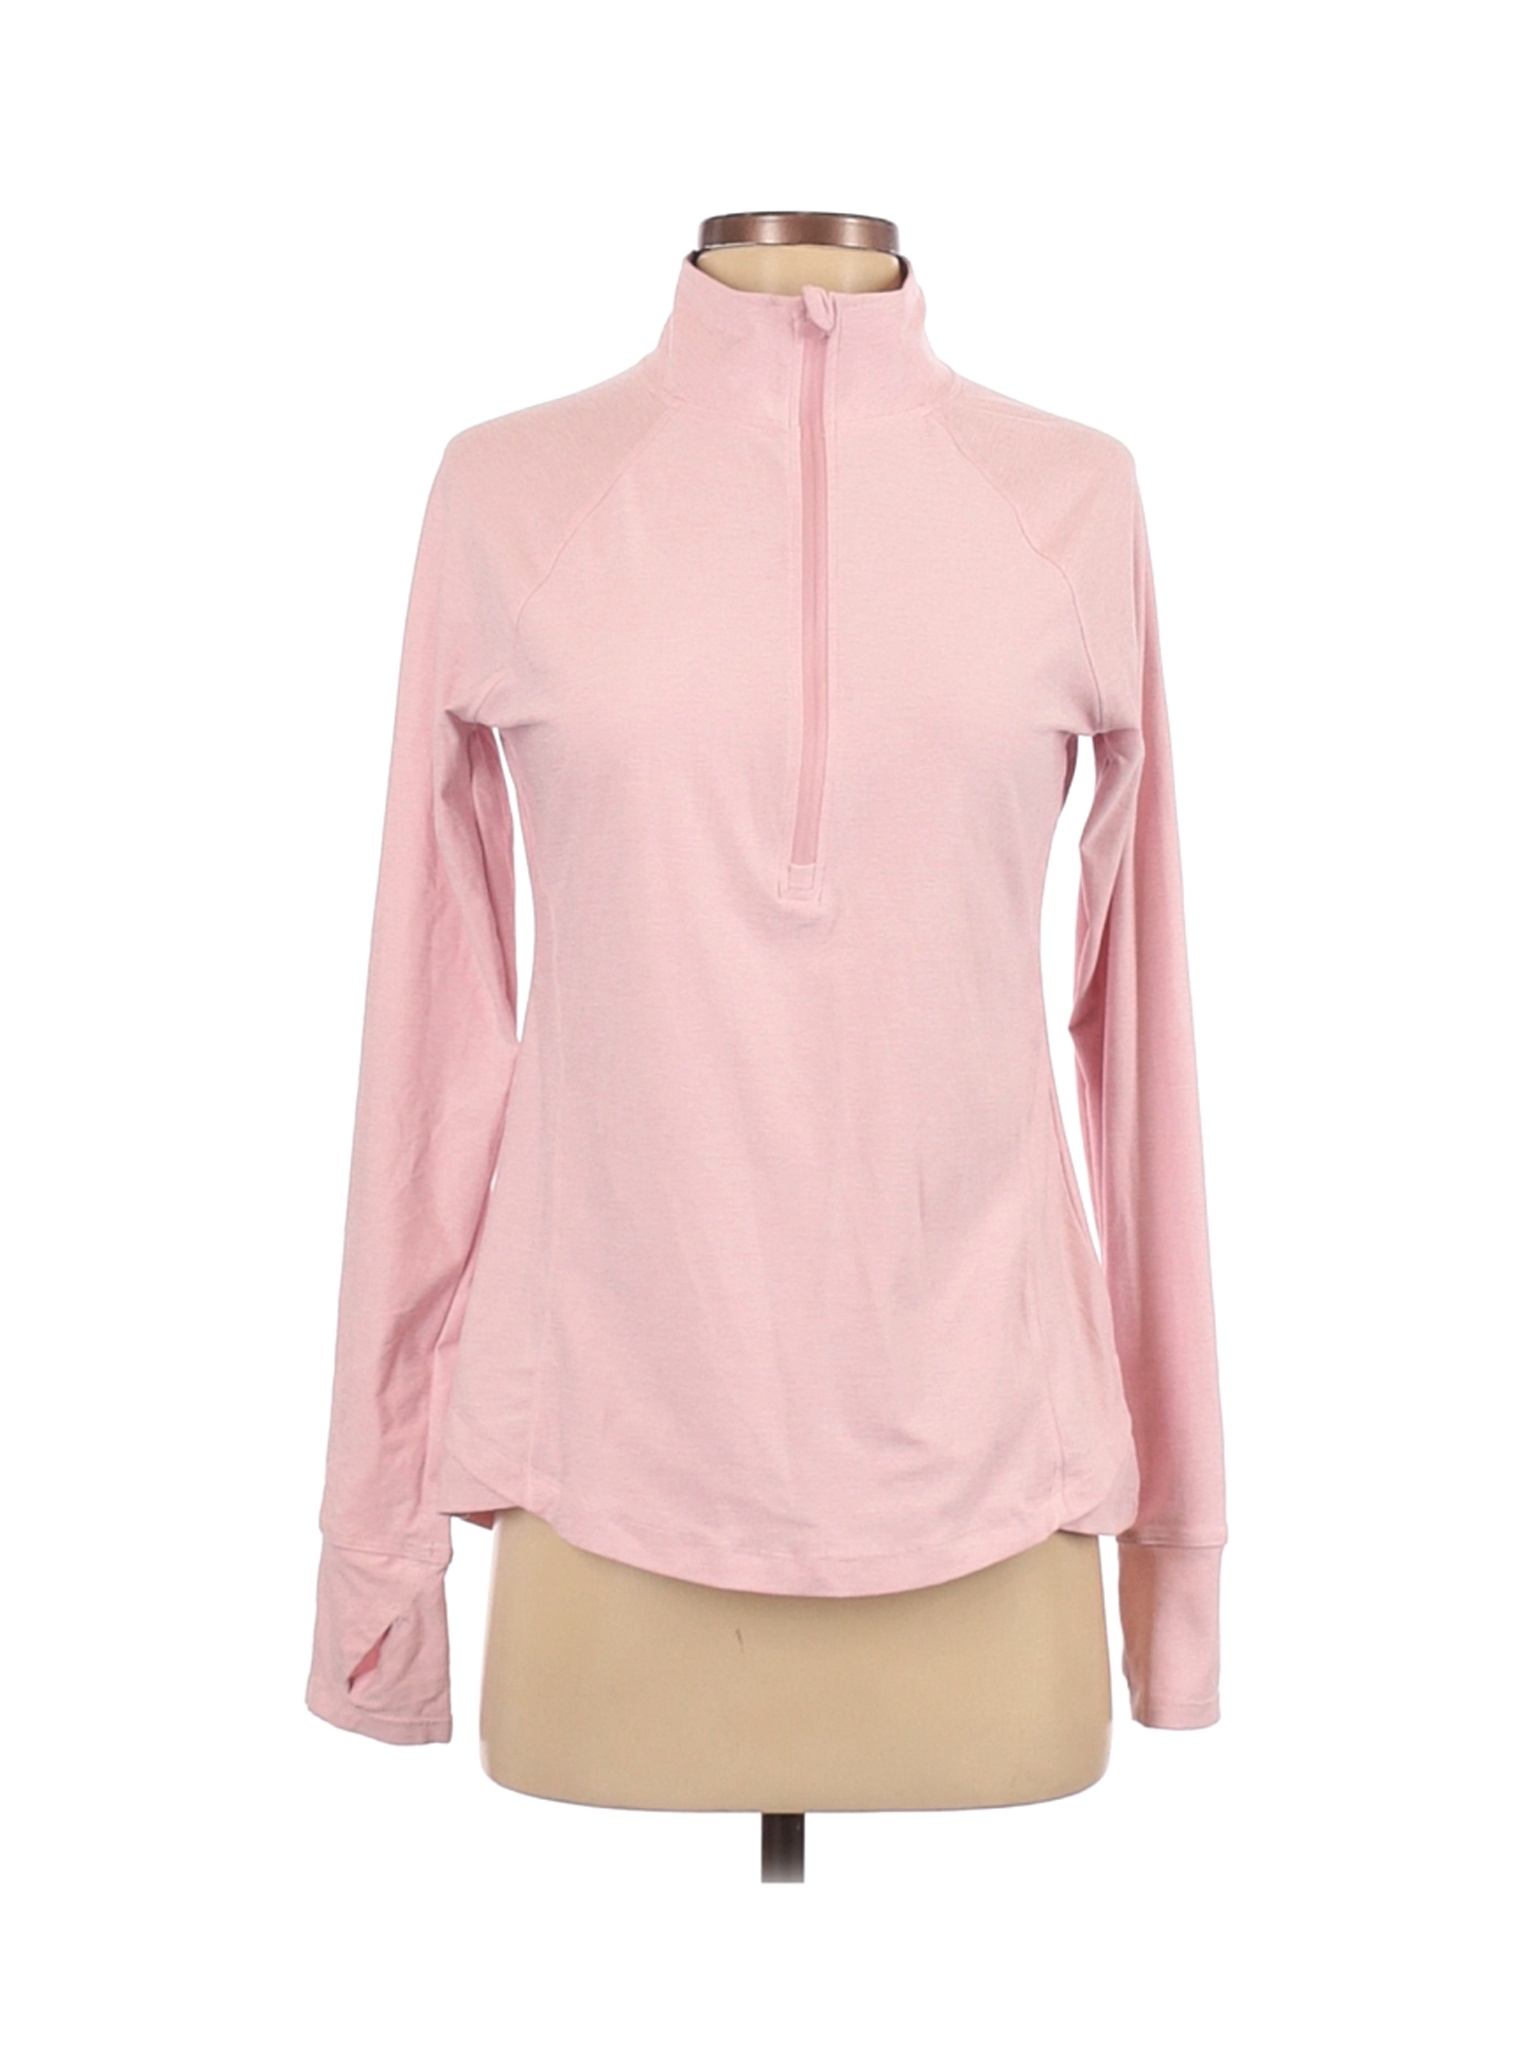 Apana Women Pink Track Jacket S | eBay